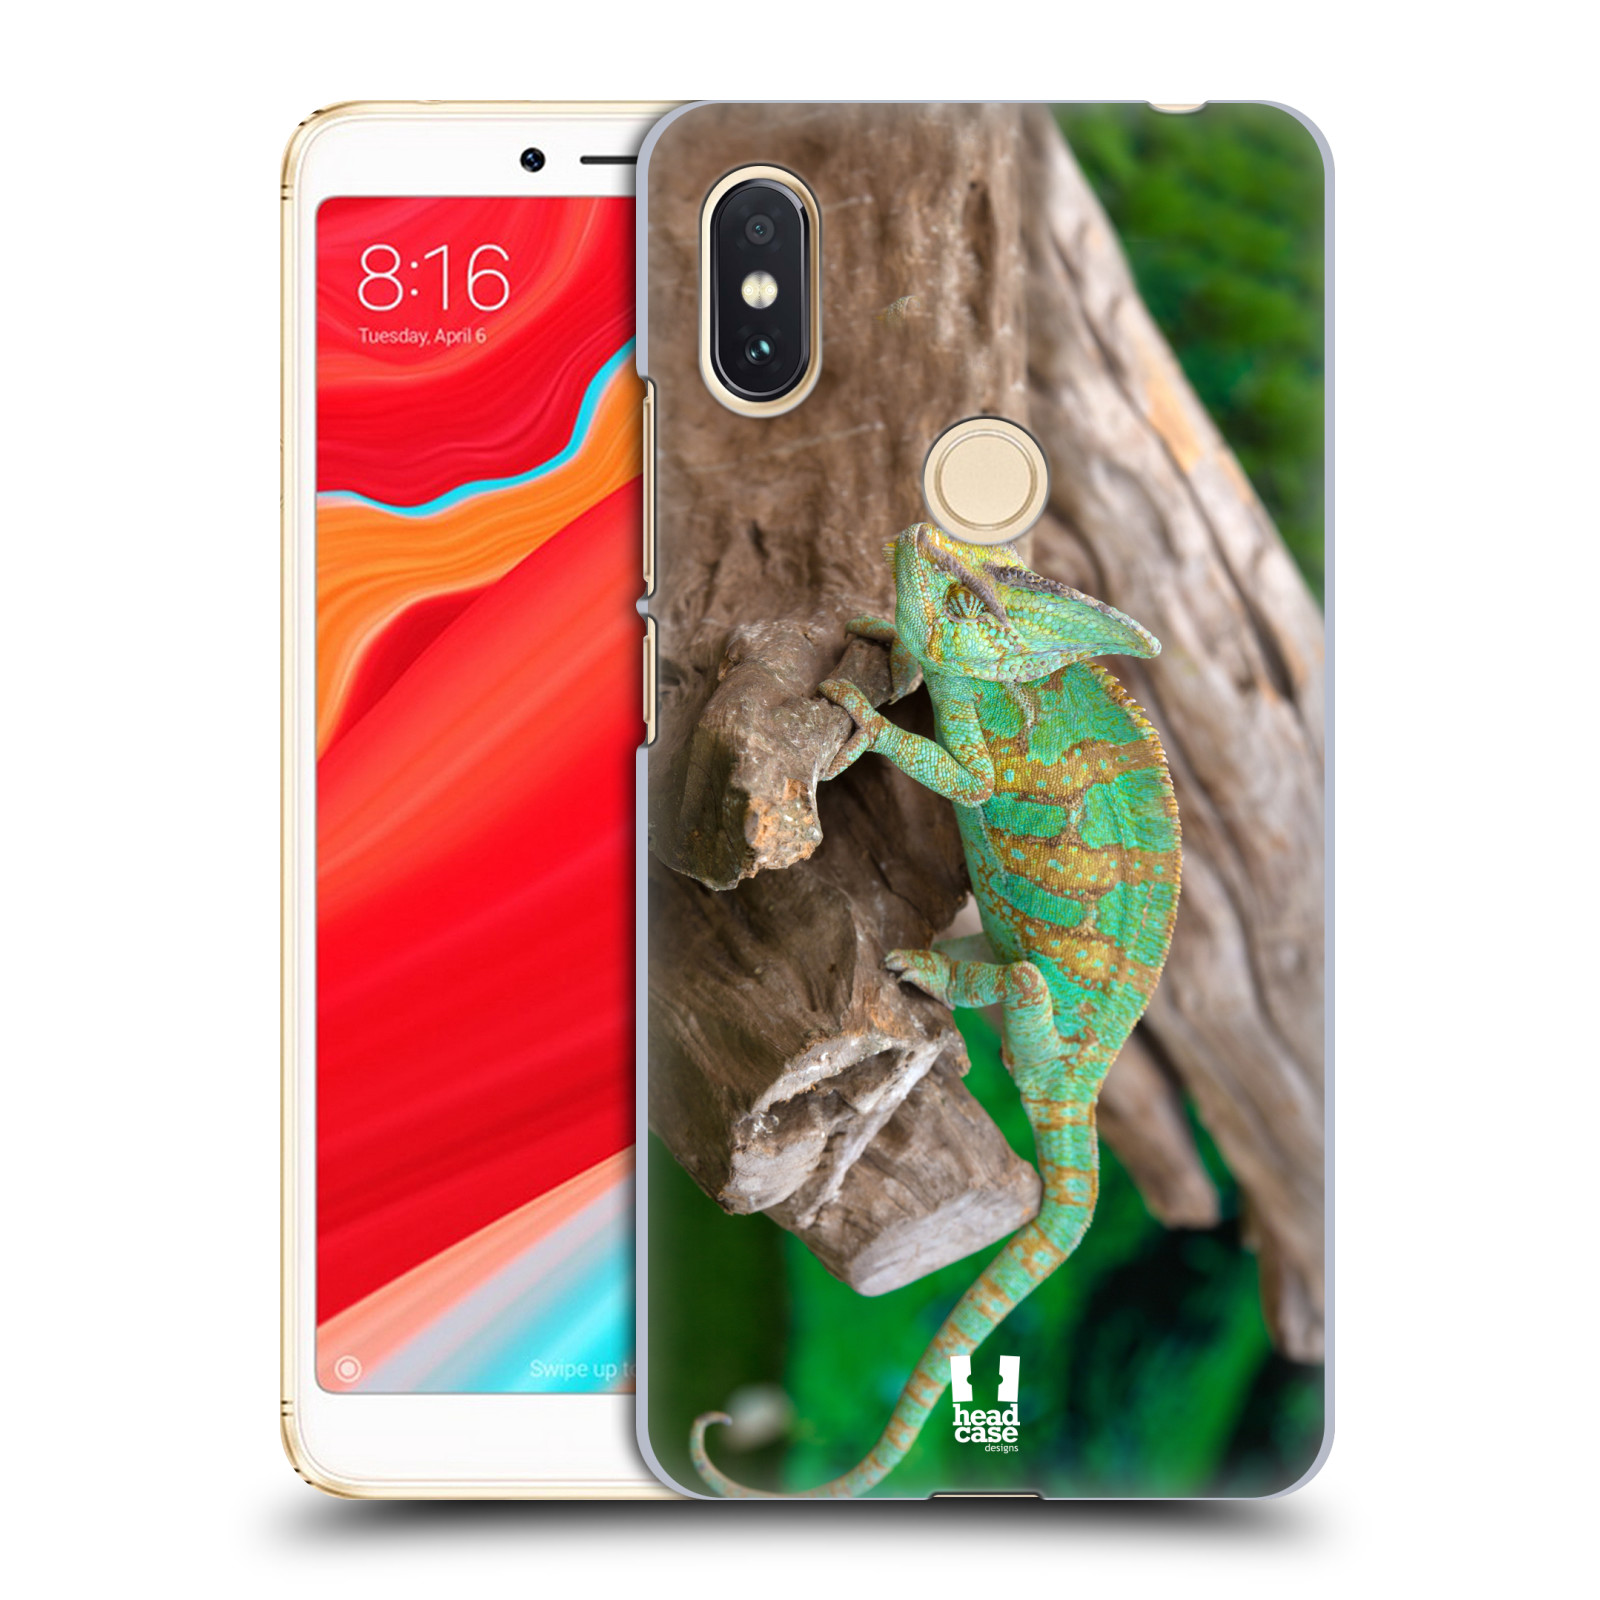 HEAD CASE plastový obal na mobil Xiaomi Redmi S2 vzor slavná zvířata foto chameleon